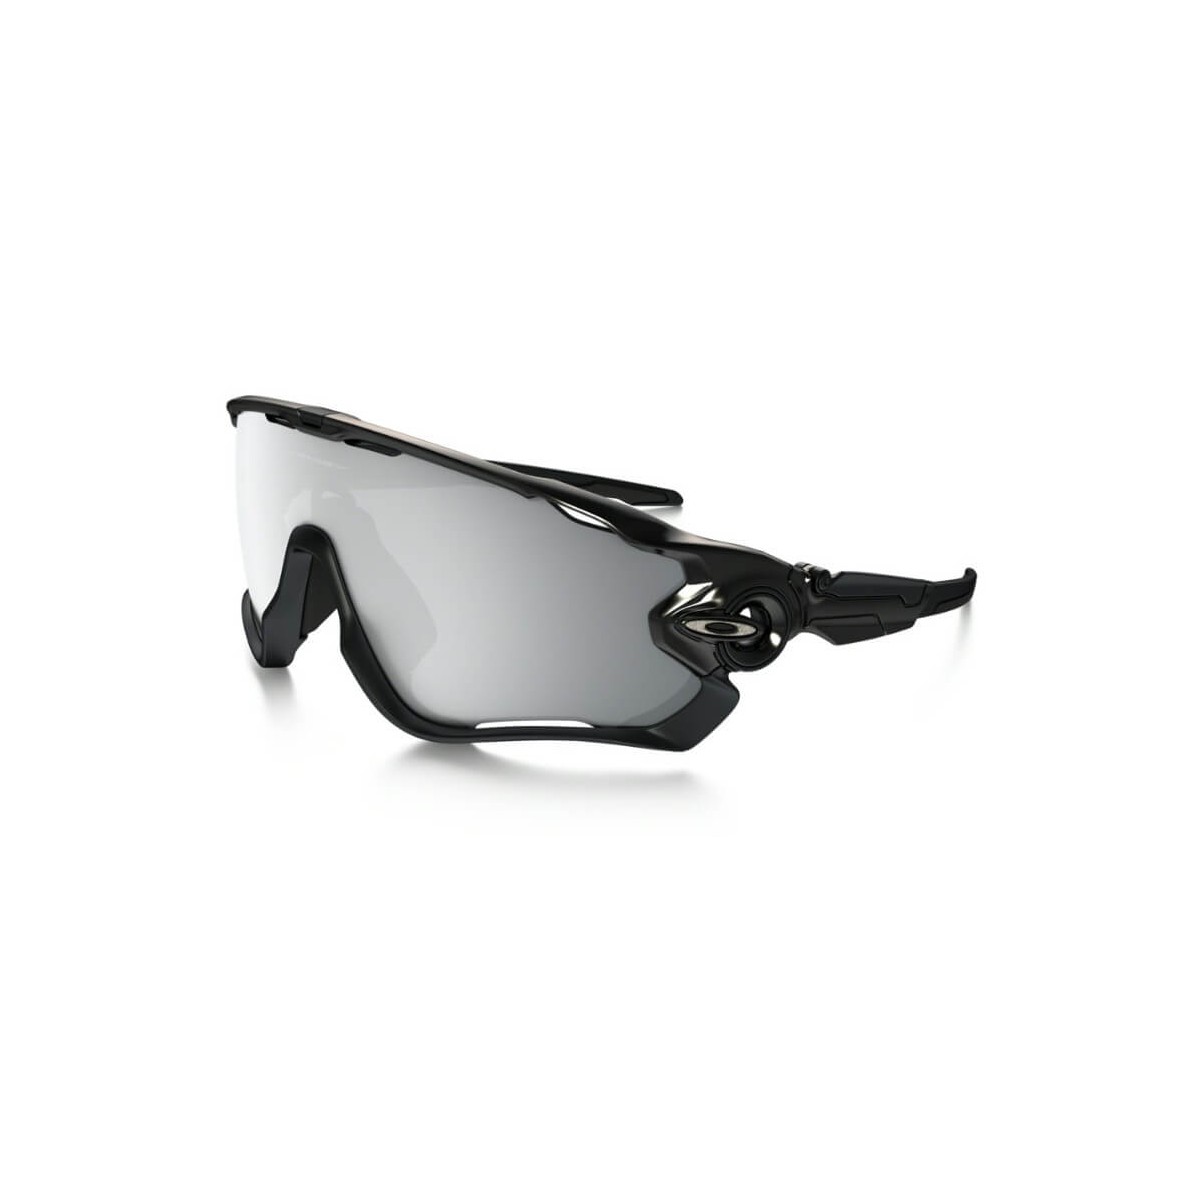 Jawbreaker HALO Kollektion schwarze Iridium Fahrradbrille